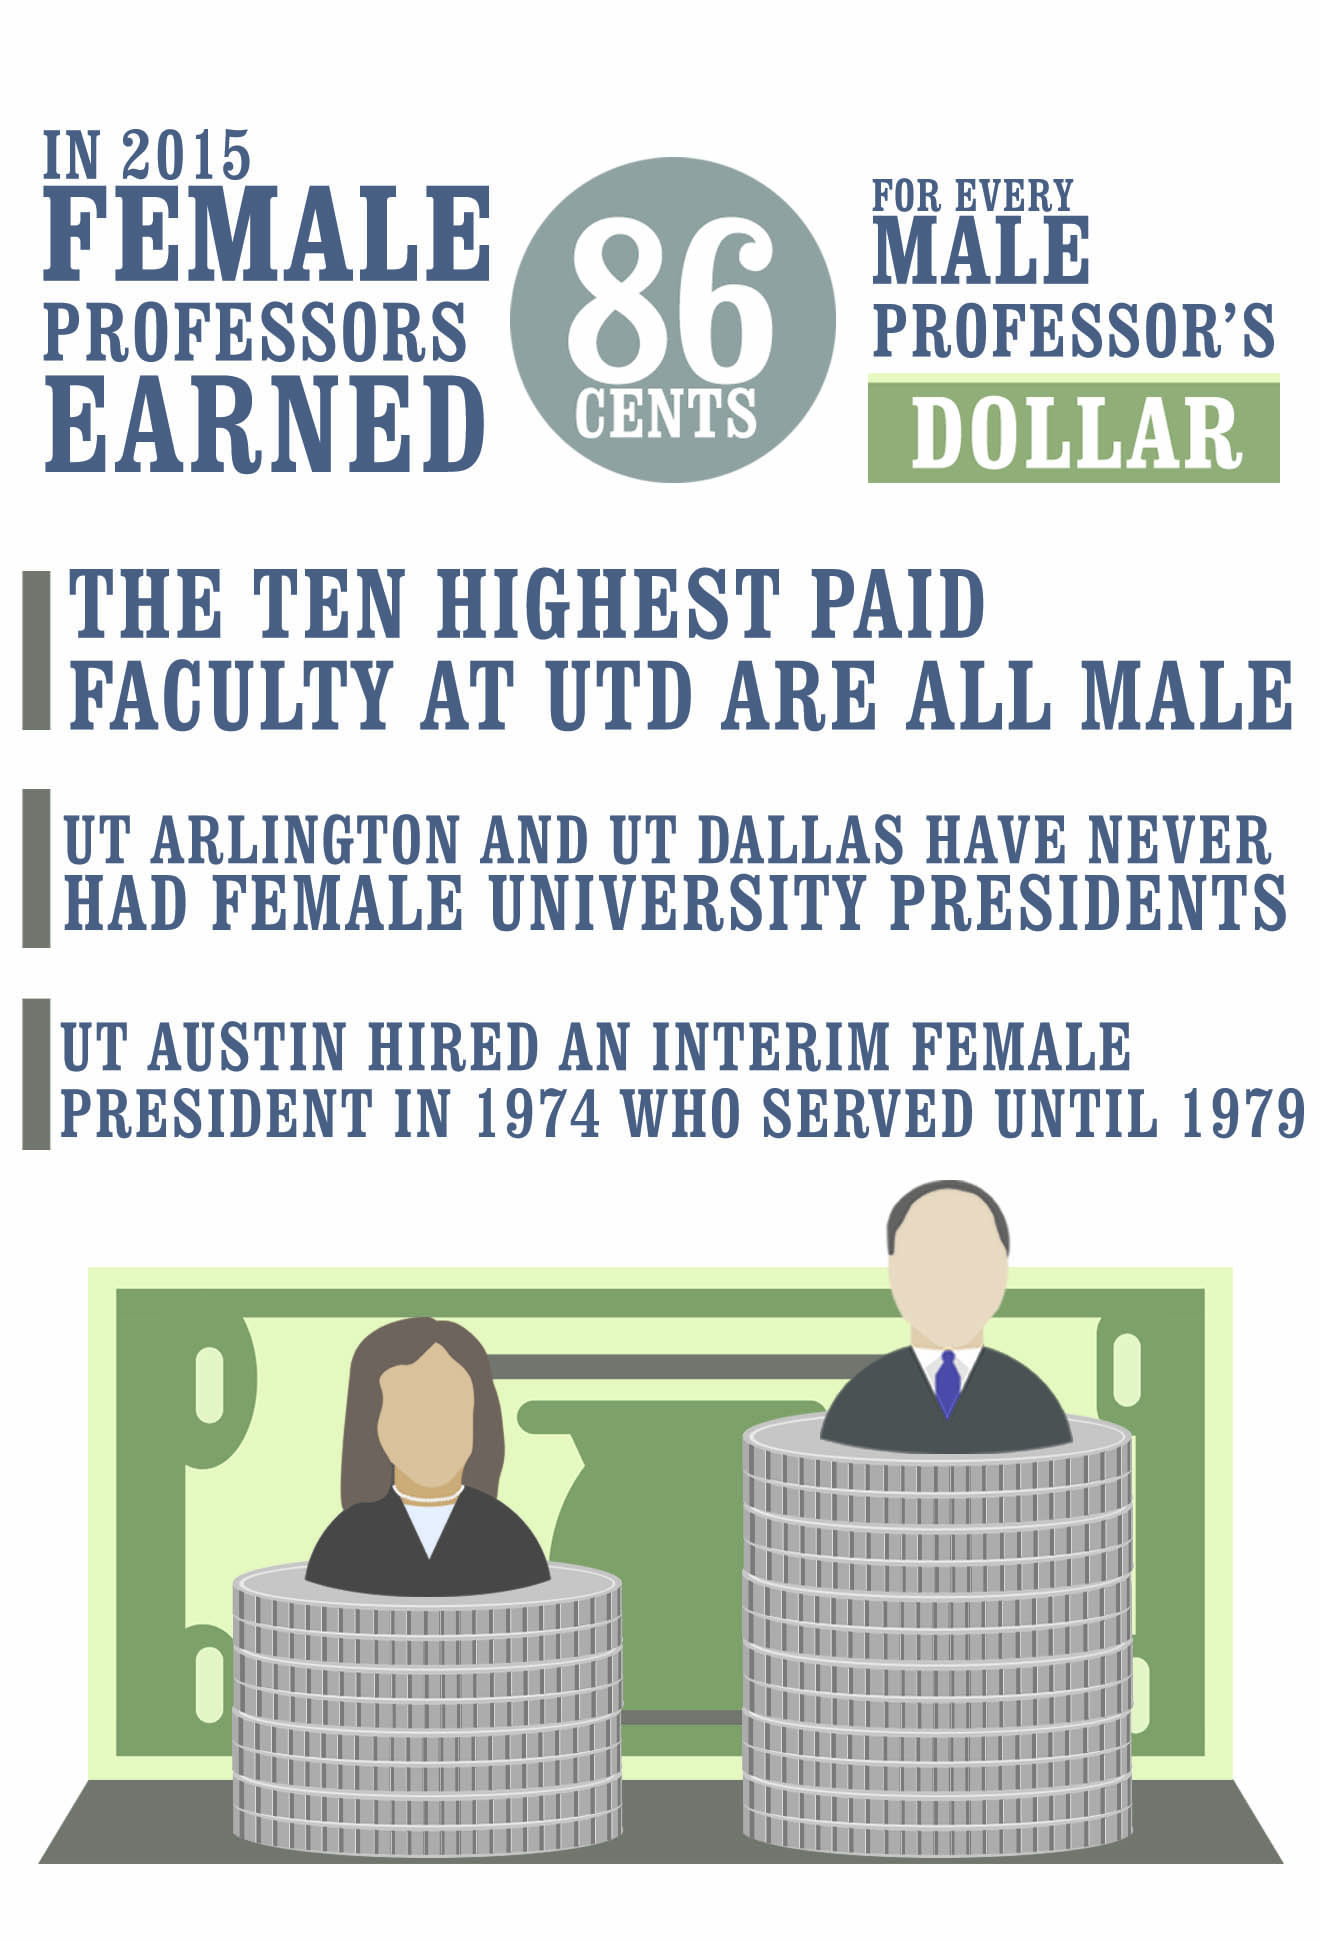 Faculty gender pay gap increases